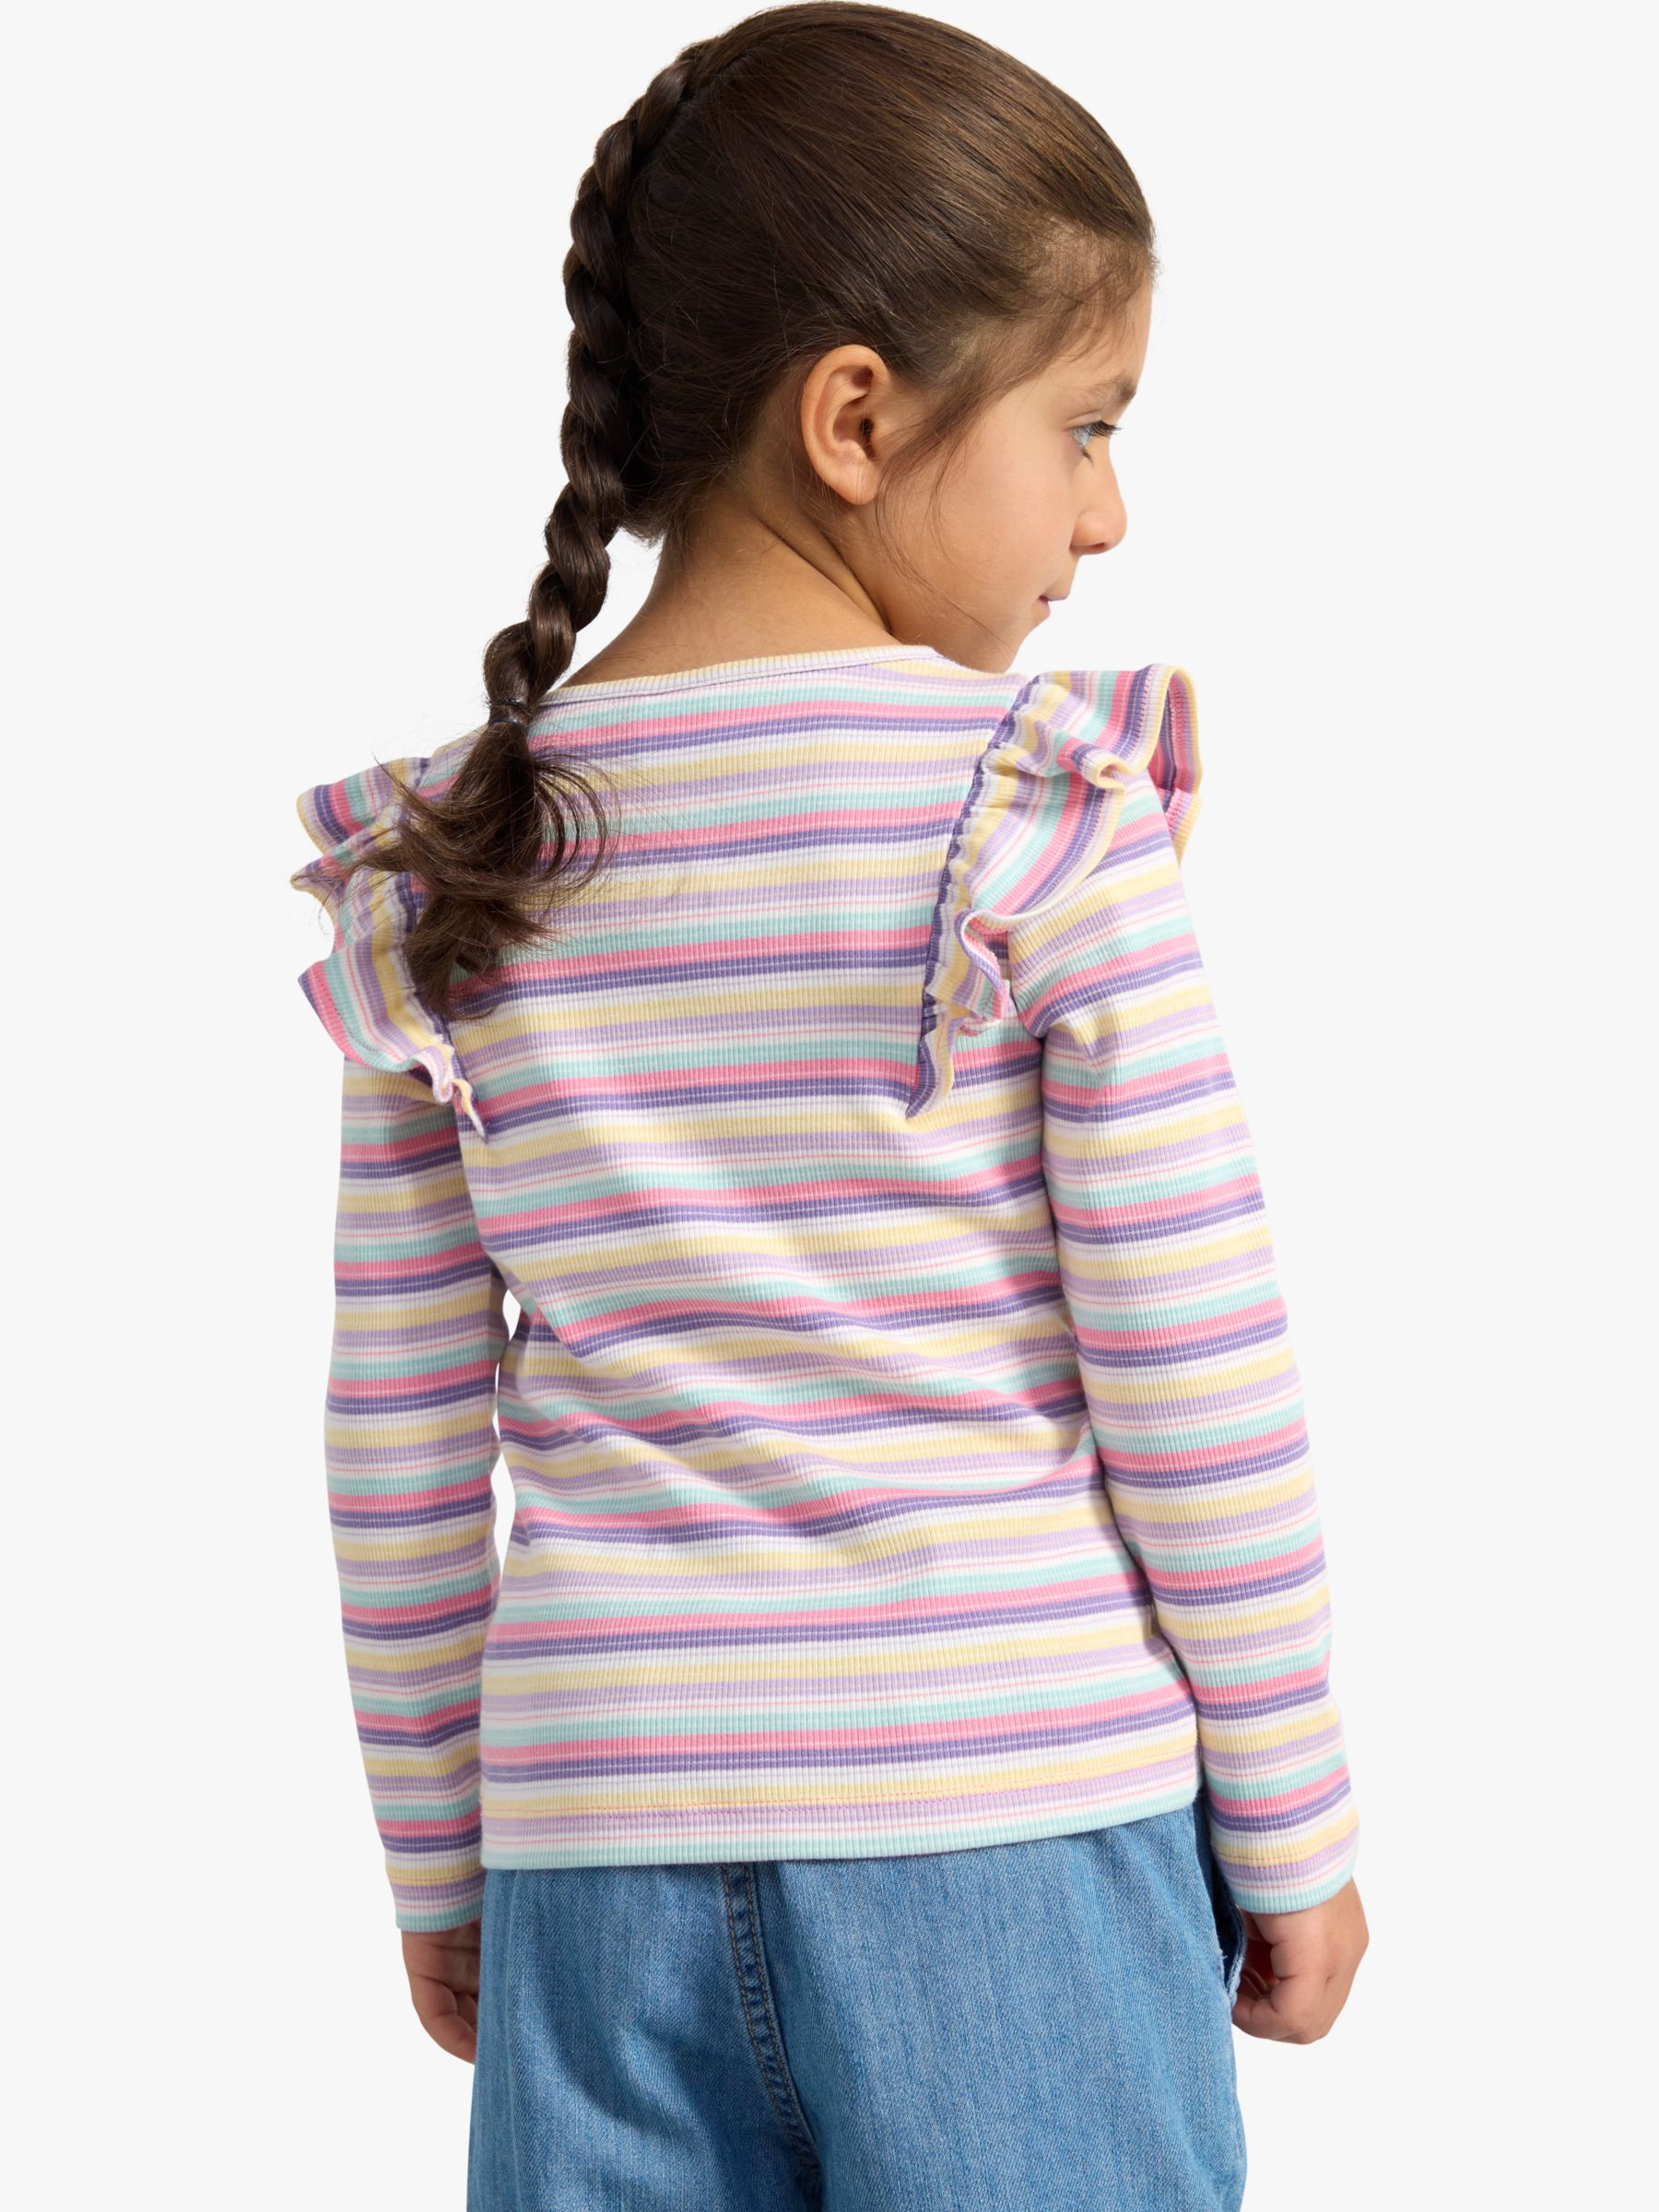 Lindex Kids' Organic Cotton Blend Stripe Frill Detail Top, Pink, 18-24 months